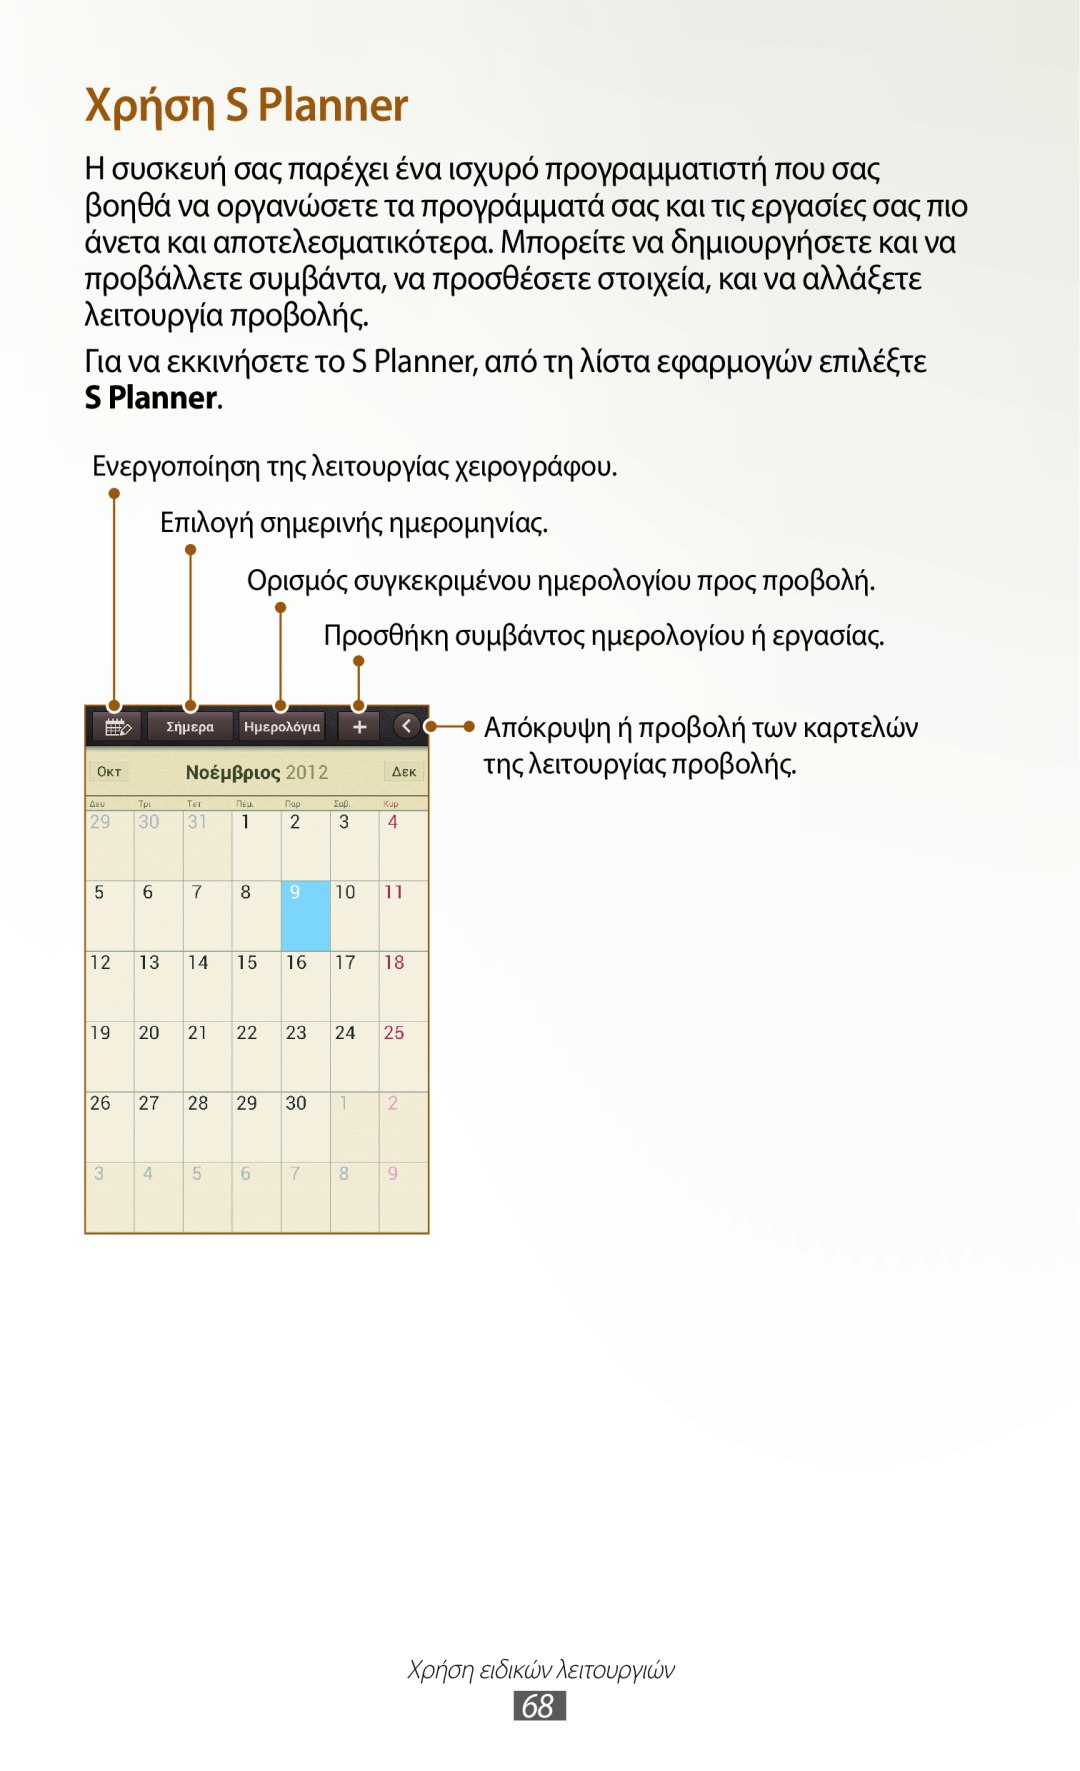 Samsung GT-N7000ZBEEUR manual Χρήση S Planner, Ενεργοποίηση της λειτουργίας χειρογράφου, Επιλογή σημερινής ημερομηνίας 